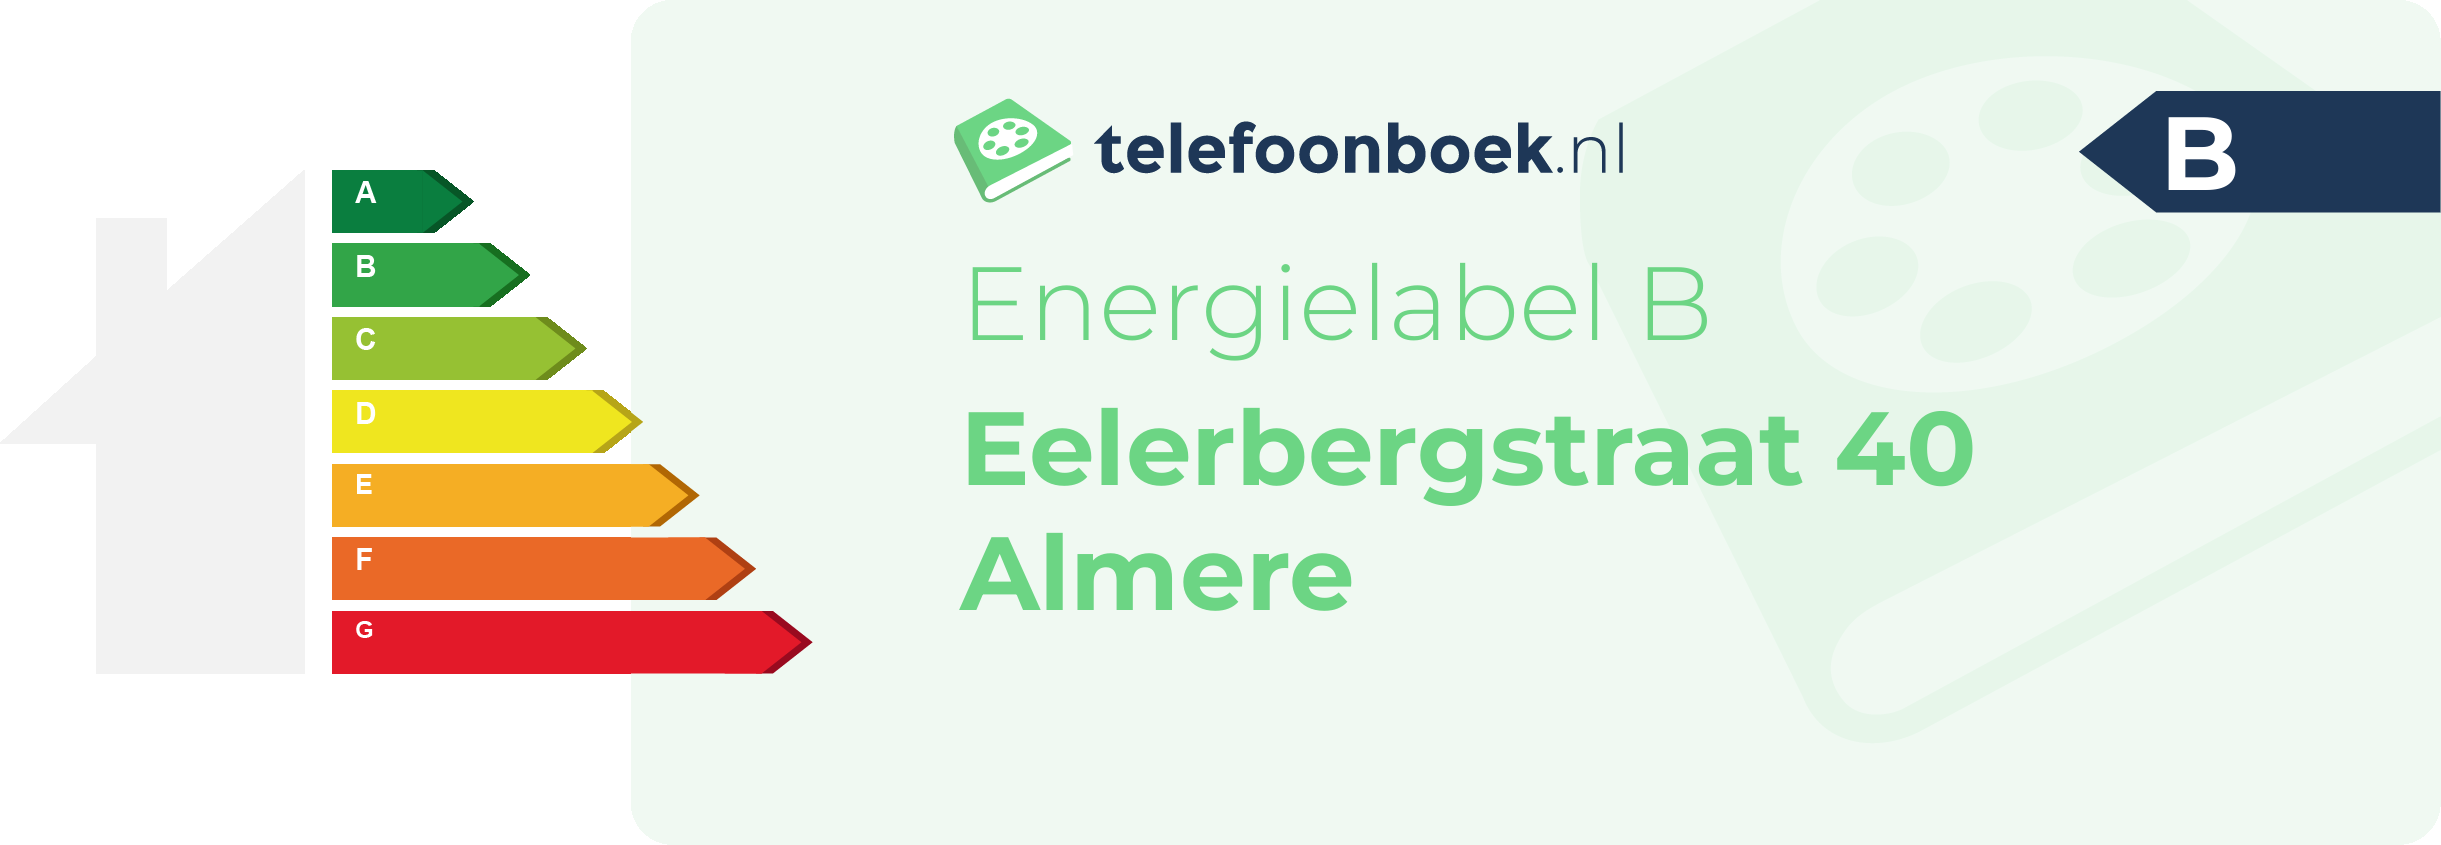 Energielabel Eelerbergstraat 40 Almere